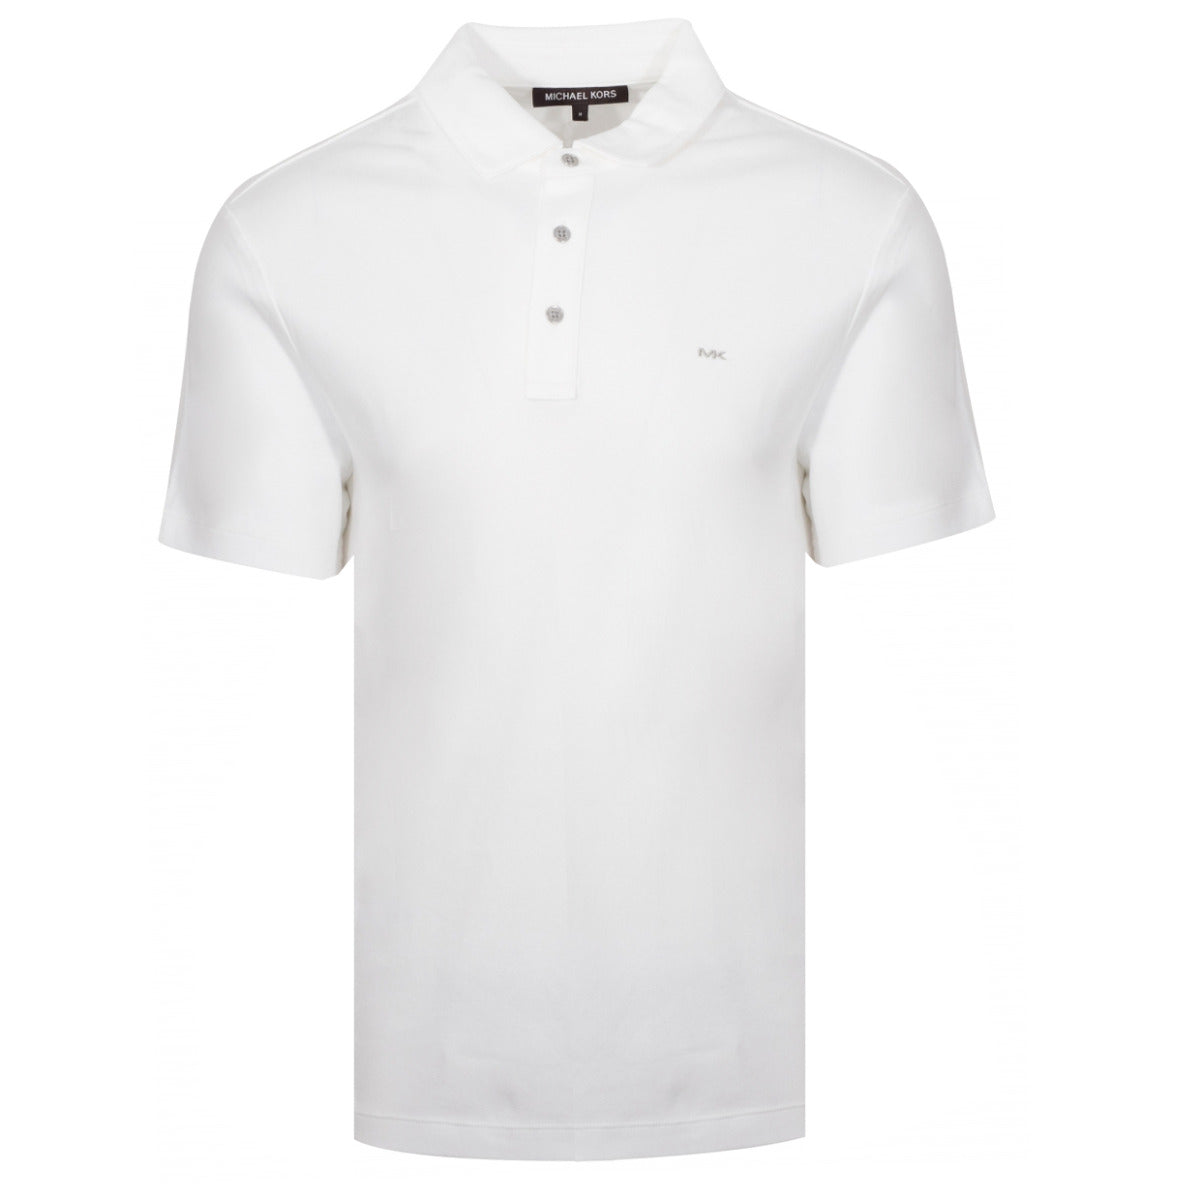 Michael Kors Solid White Polo Shirt - Retro Designer Wear